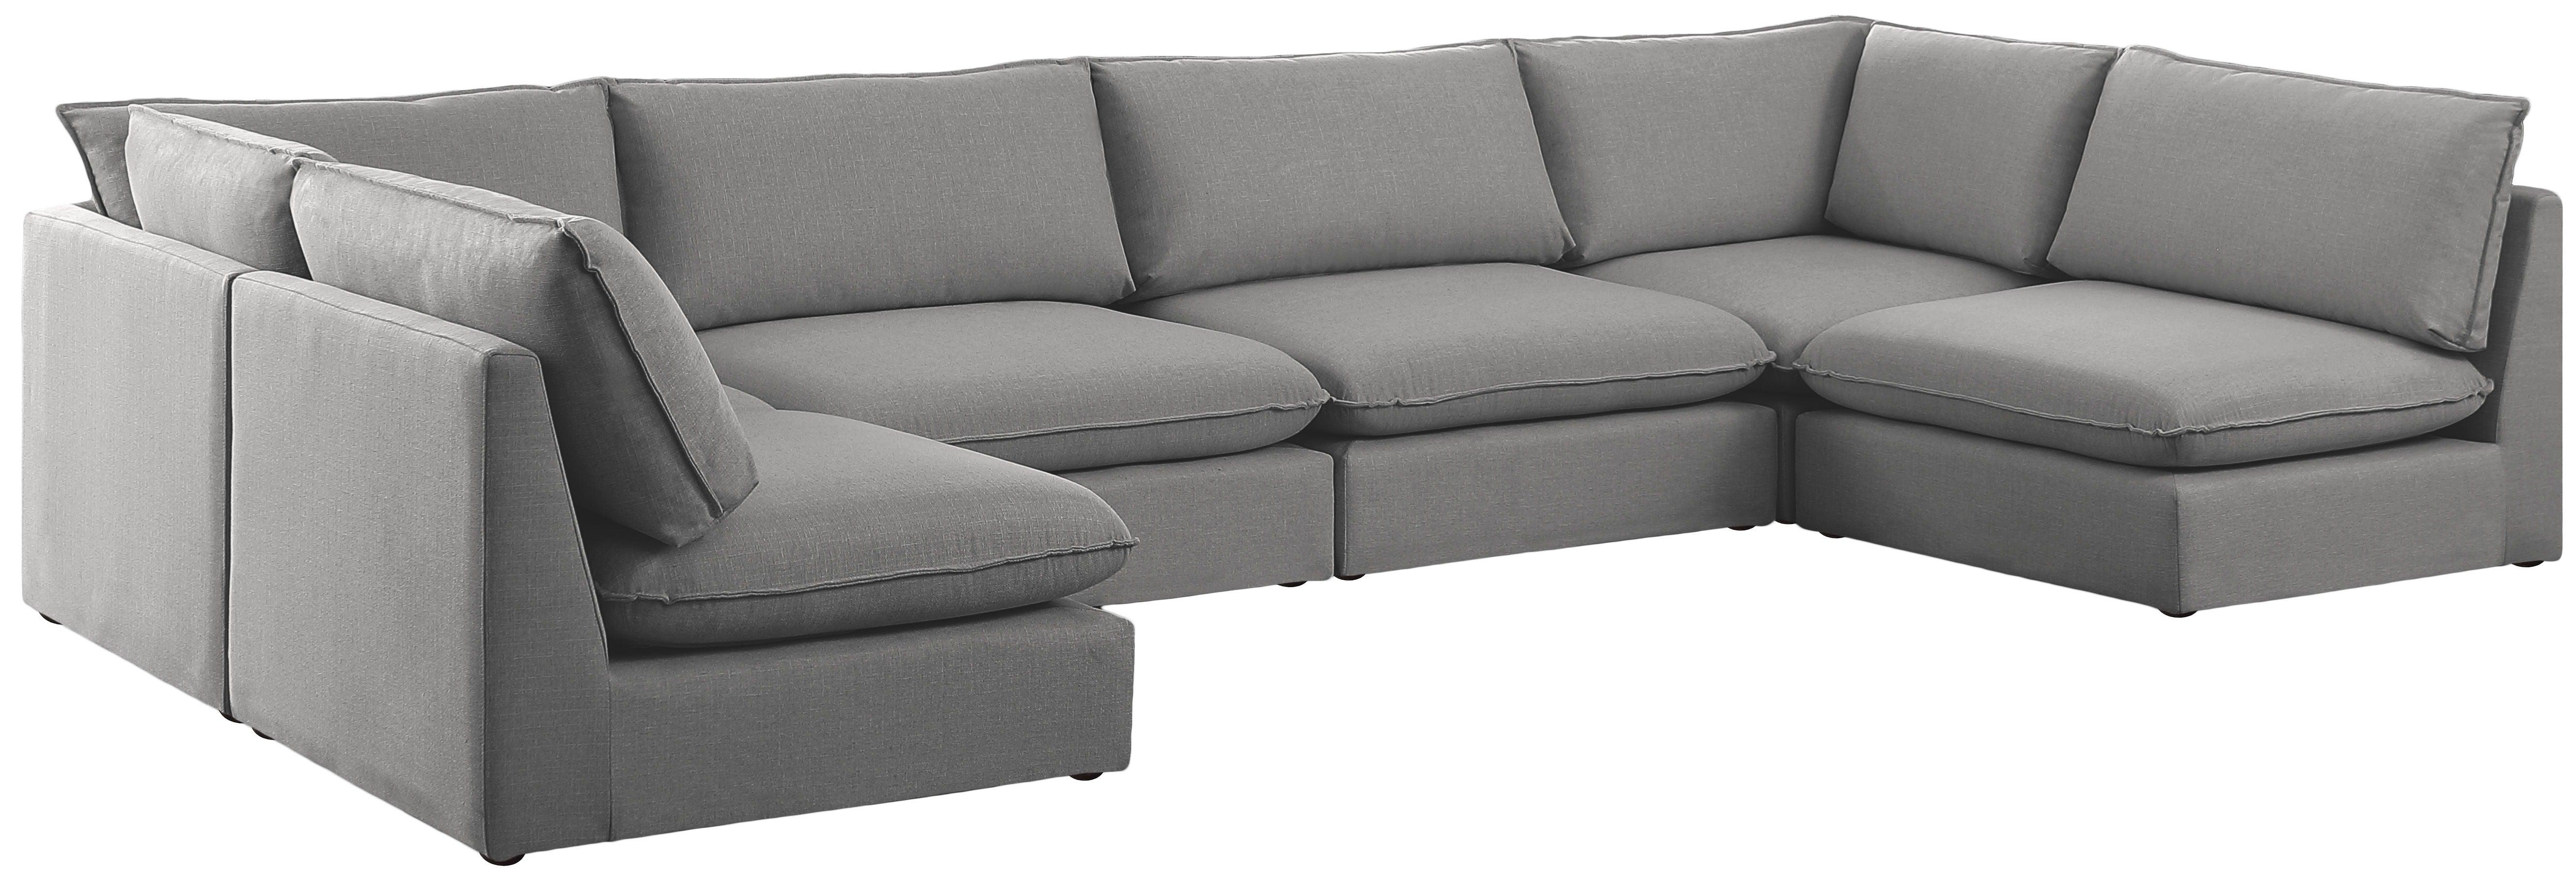 Meridian Furniture - Mackenzie - Modular Sectional 6 Piece - Gray - Modern & Contemporary - 5th Avenue Furniture